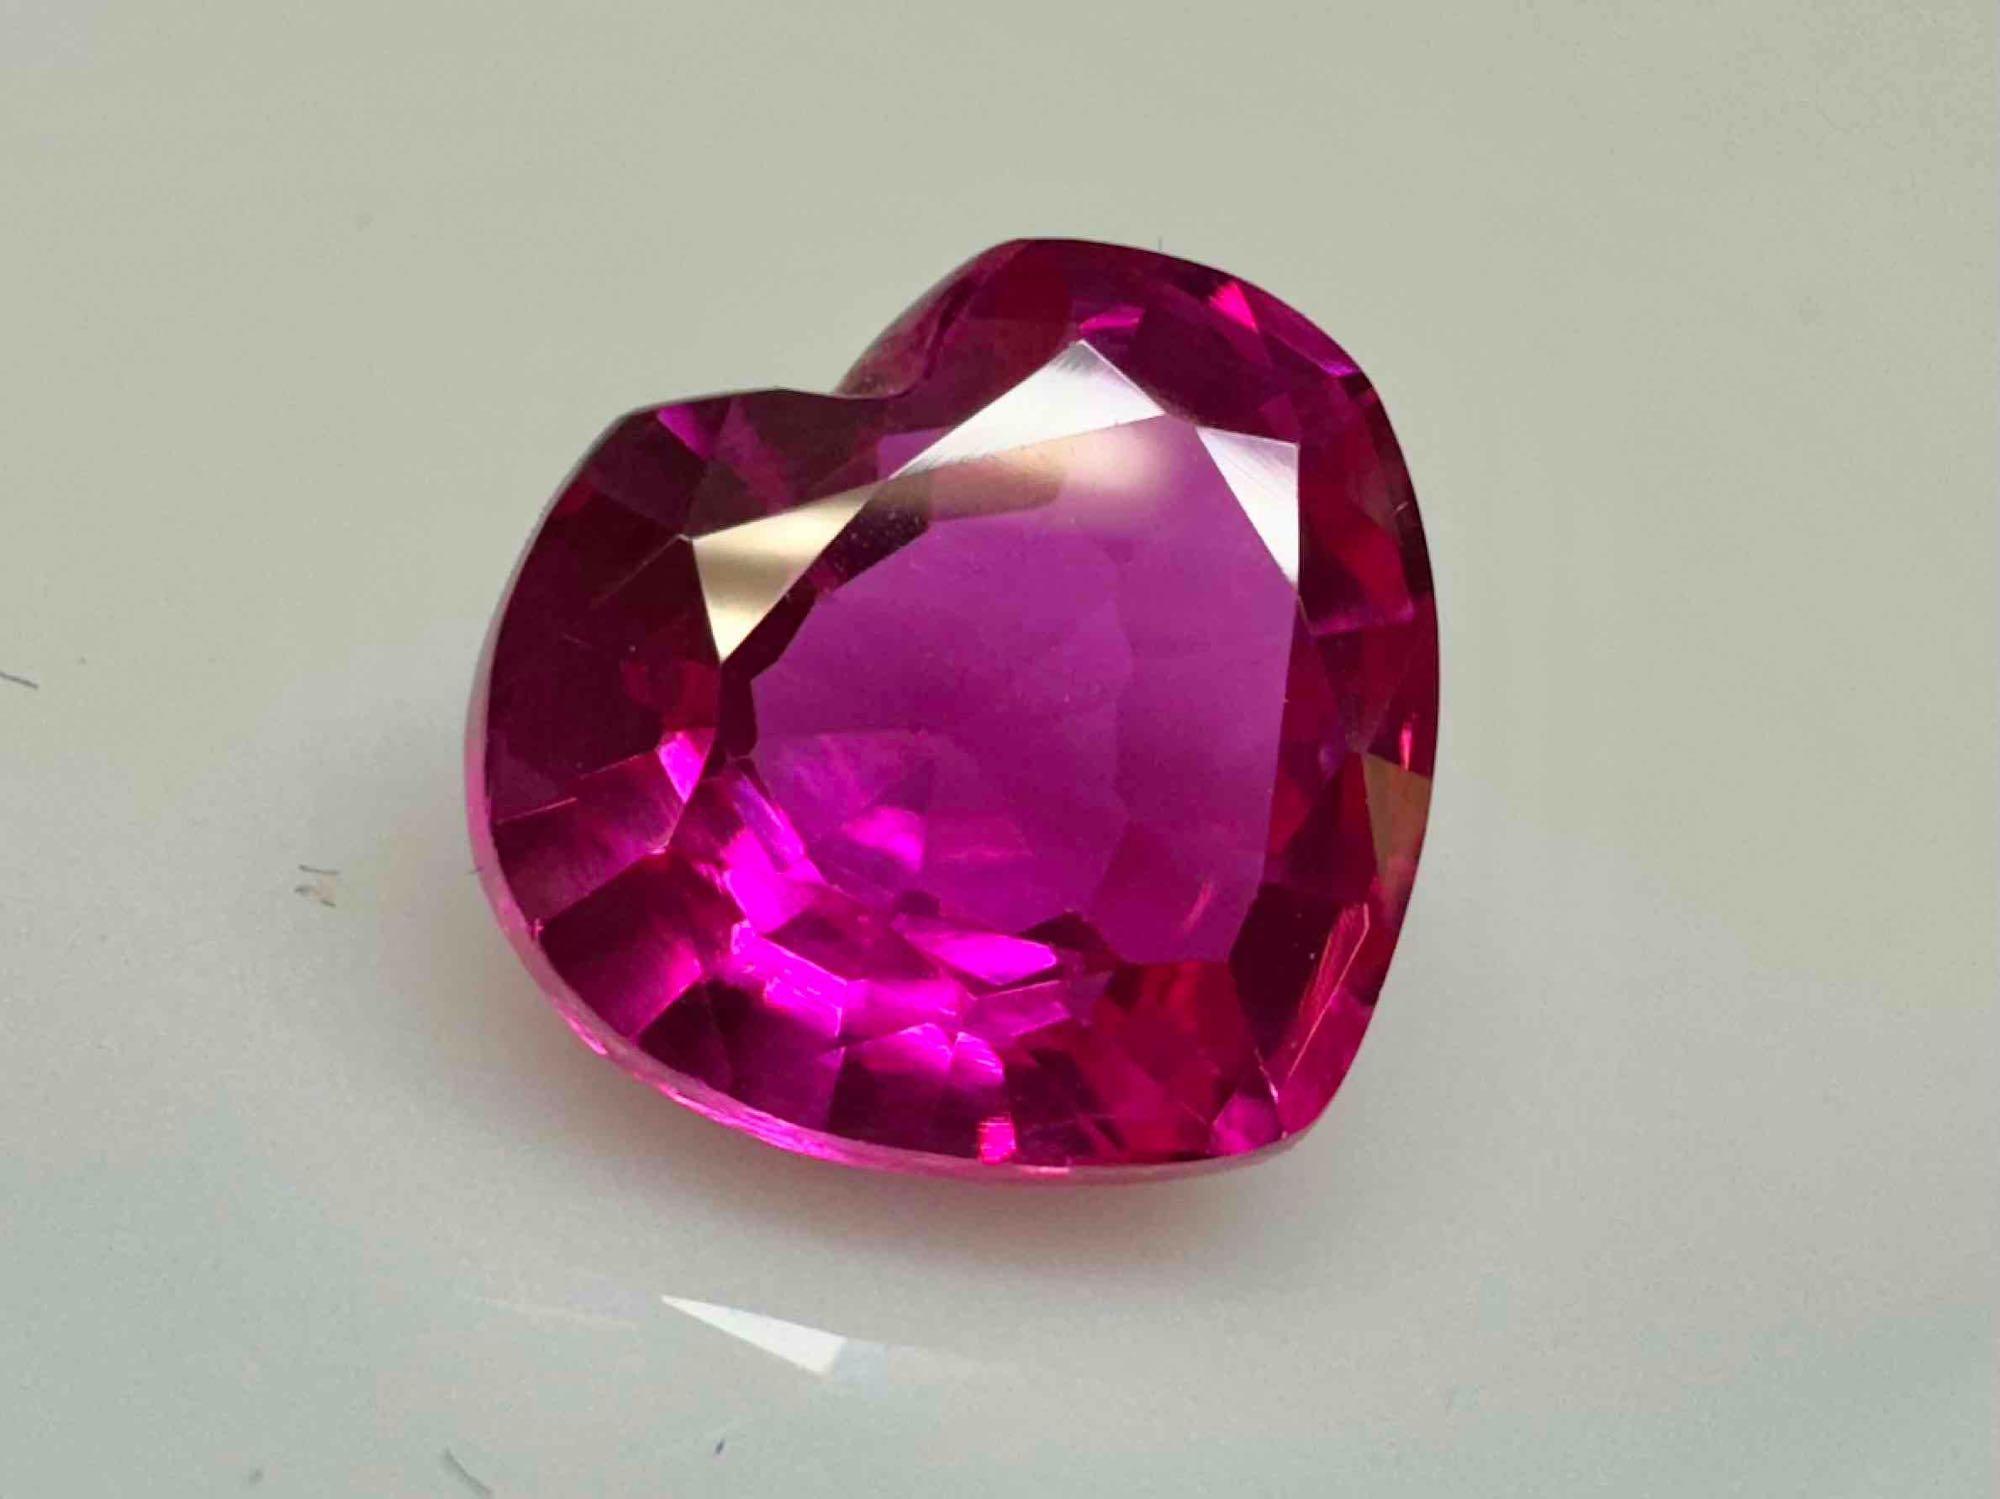 Beautiful Heart Cut Pink Sapphire Gemstone Sparkles Abound 11.4ct